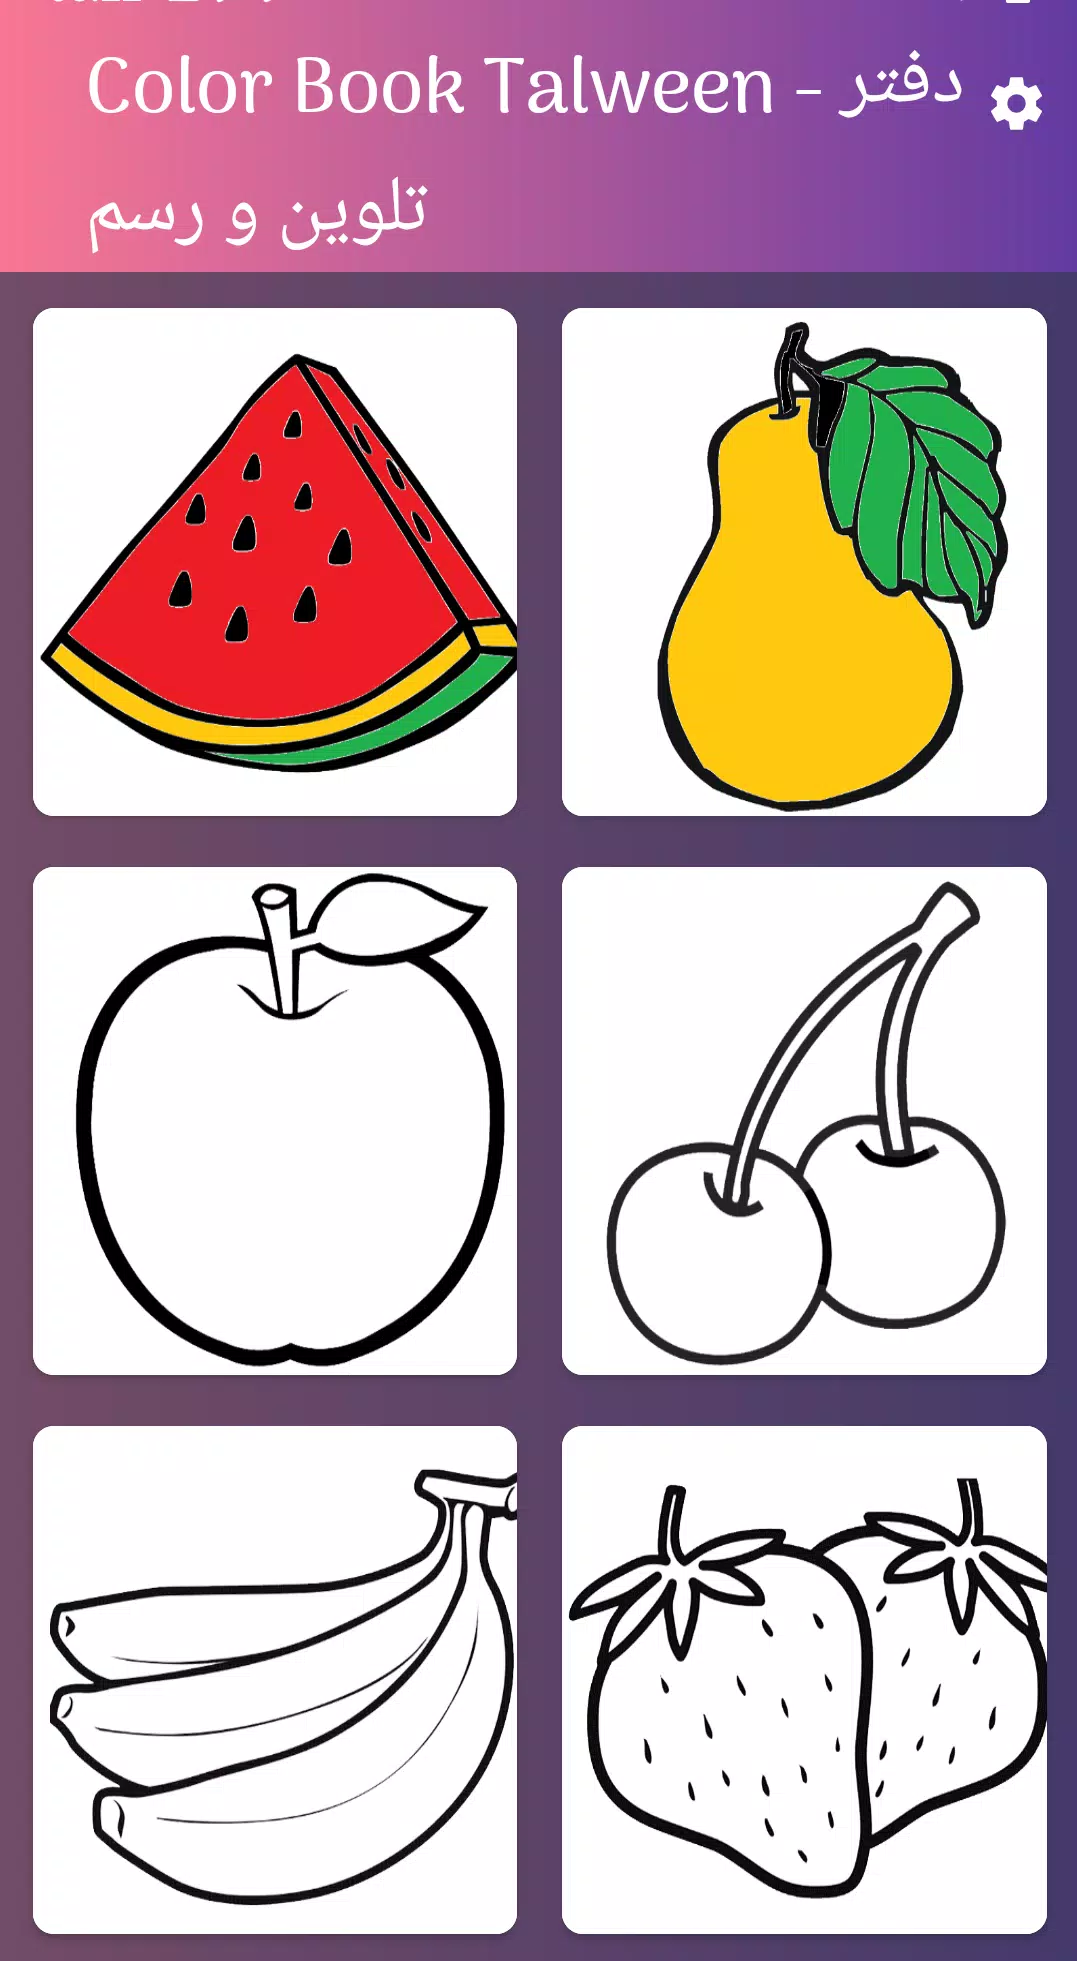 دفتر تلوين و رسم للاطفال - العاب بنات العاب اولاد APK for Android Download